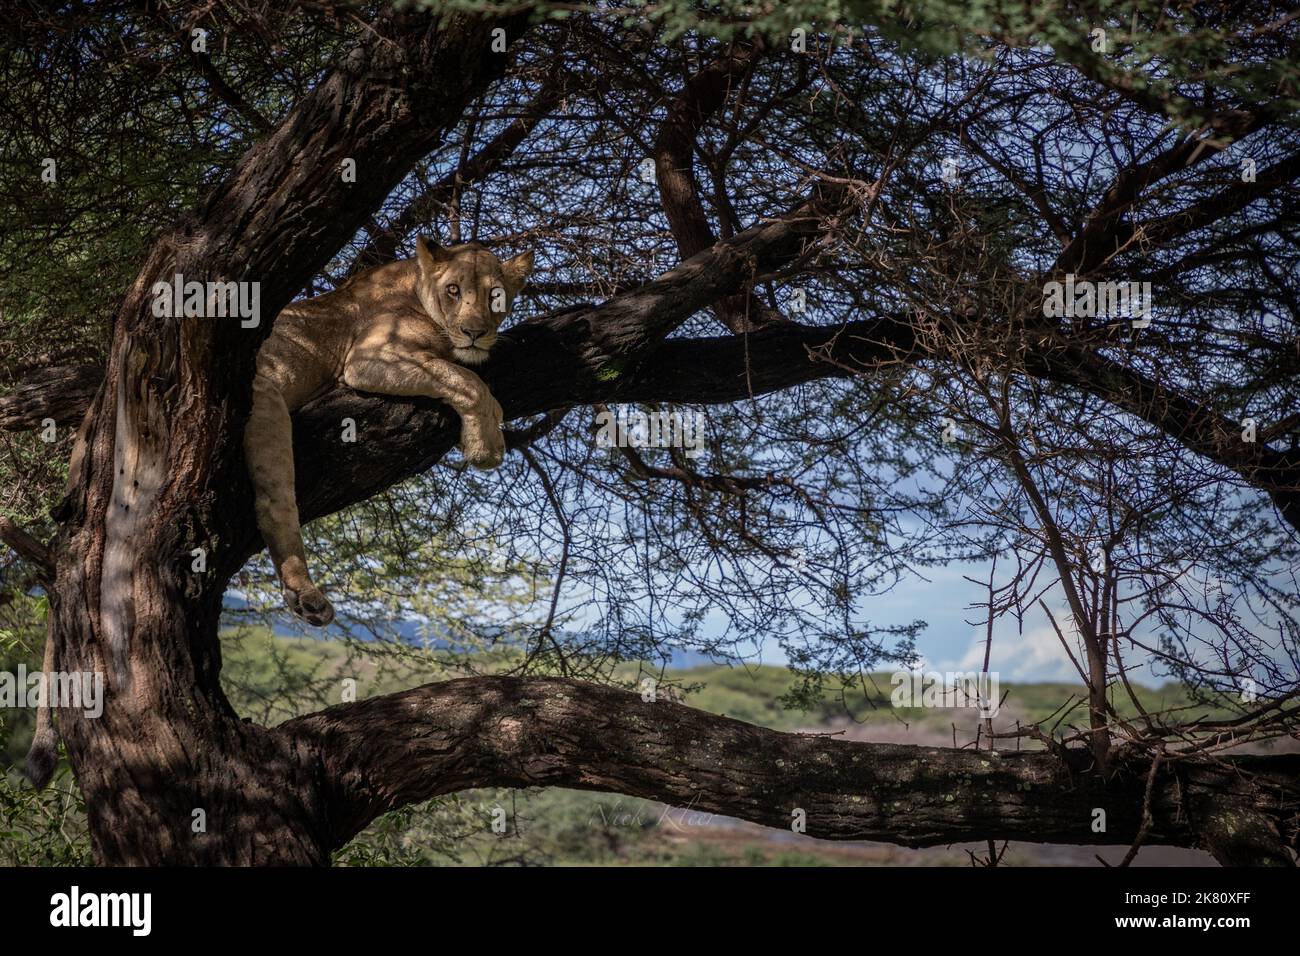 A lioness sleeping in a tree, photo taken on a safari in Tanzania Stock Photo